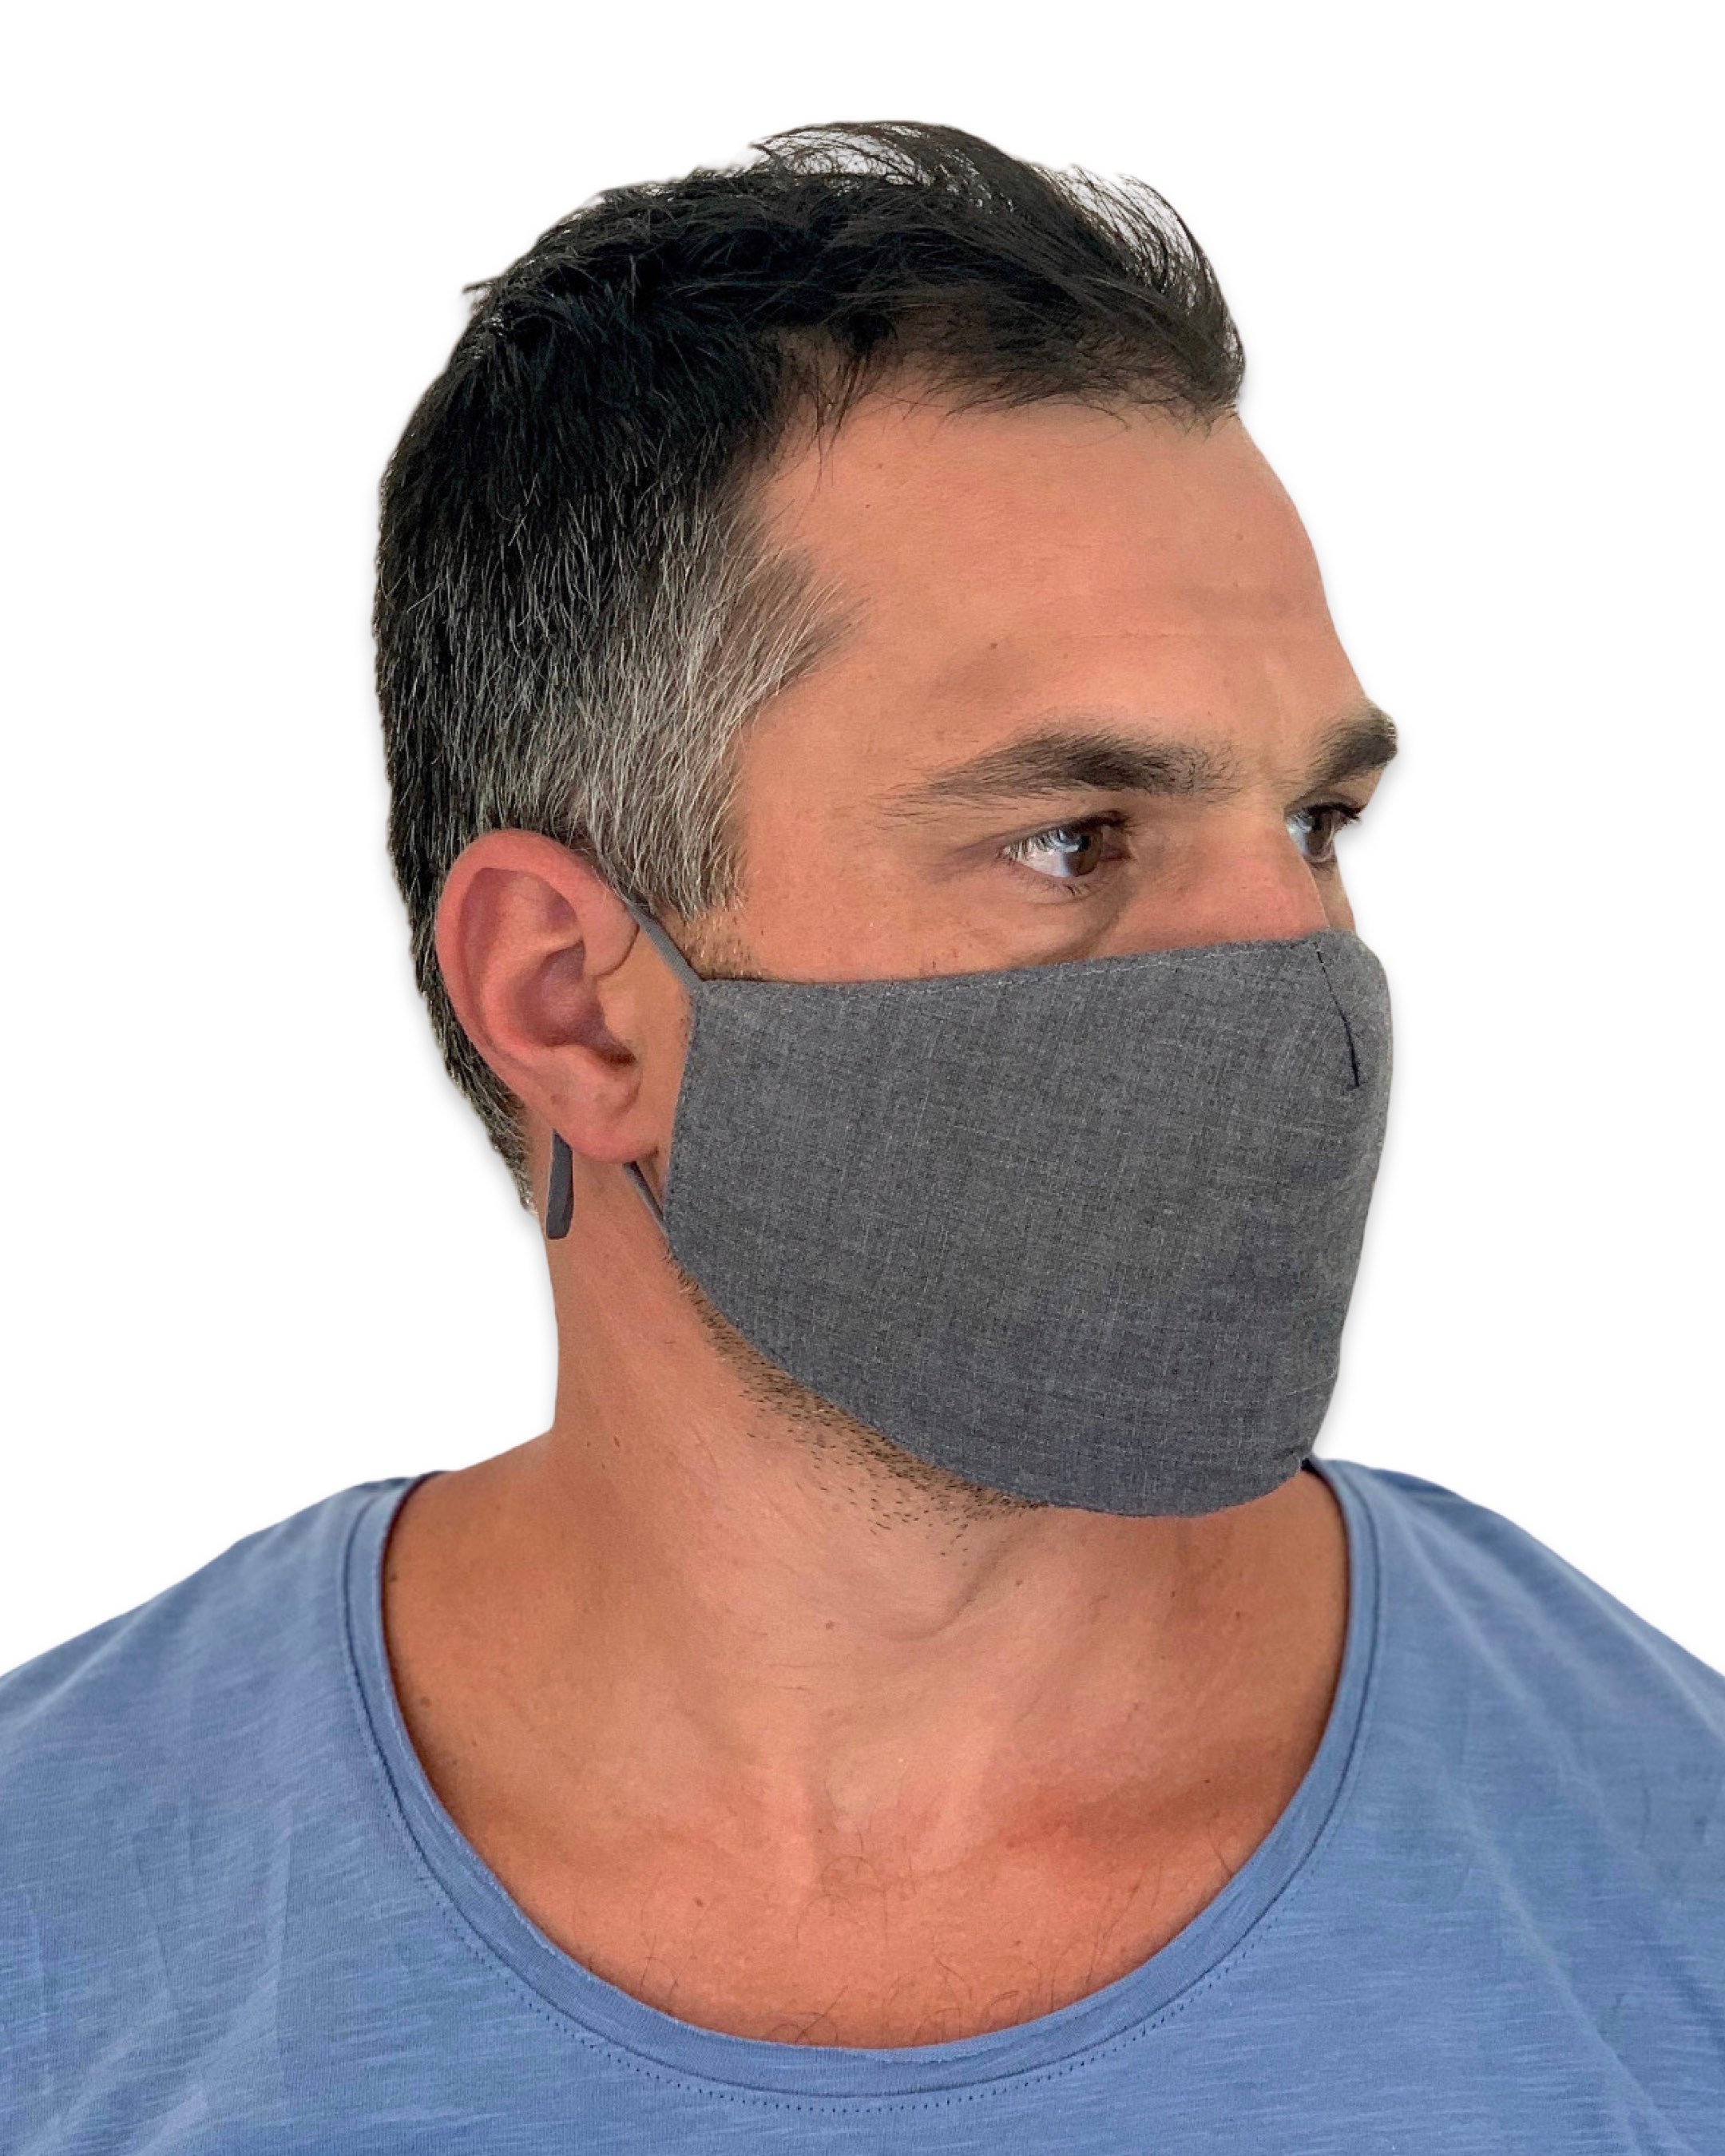 Chad Flag Unisex Cloth Face Masks Reusable Washable Ajustable